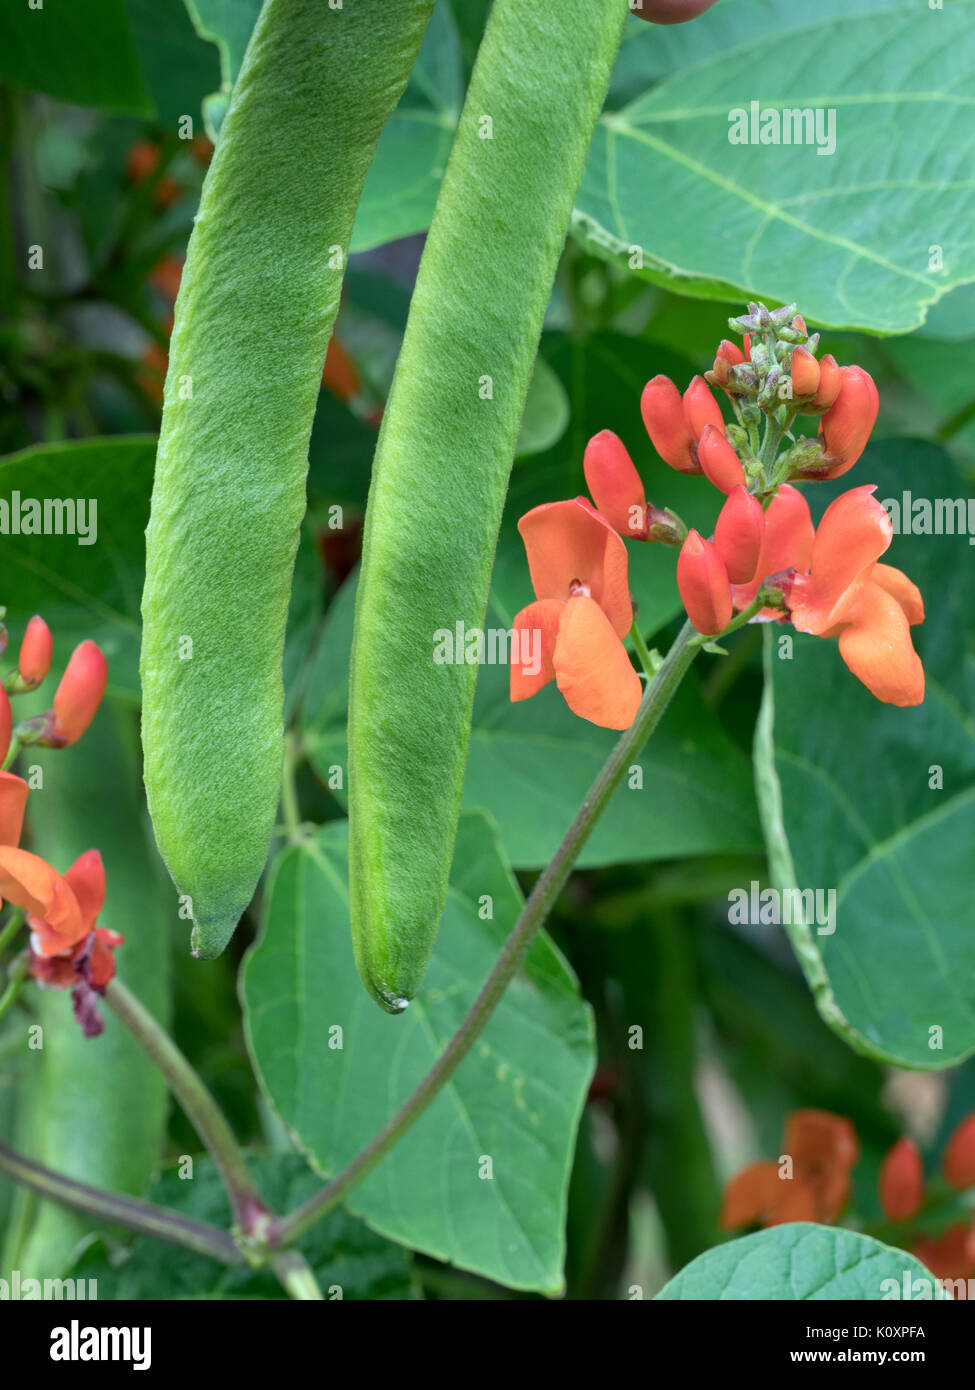 Runner Beans and Red runner bean flowers of Scarlet Emperor variety Stock Photo